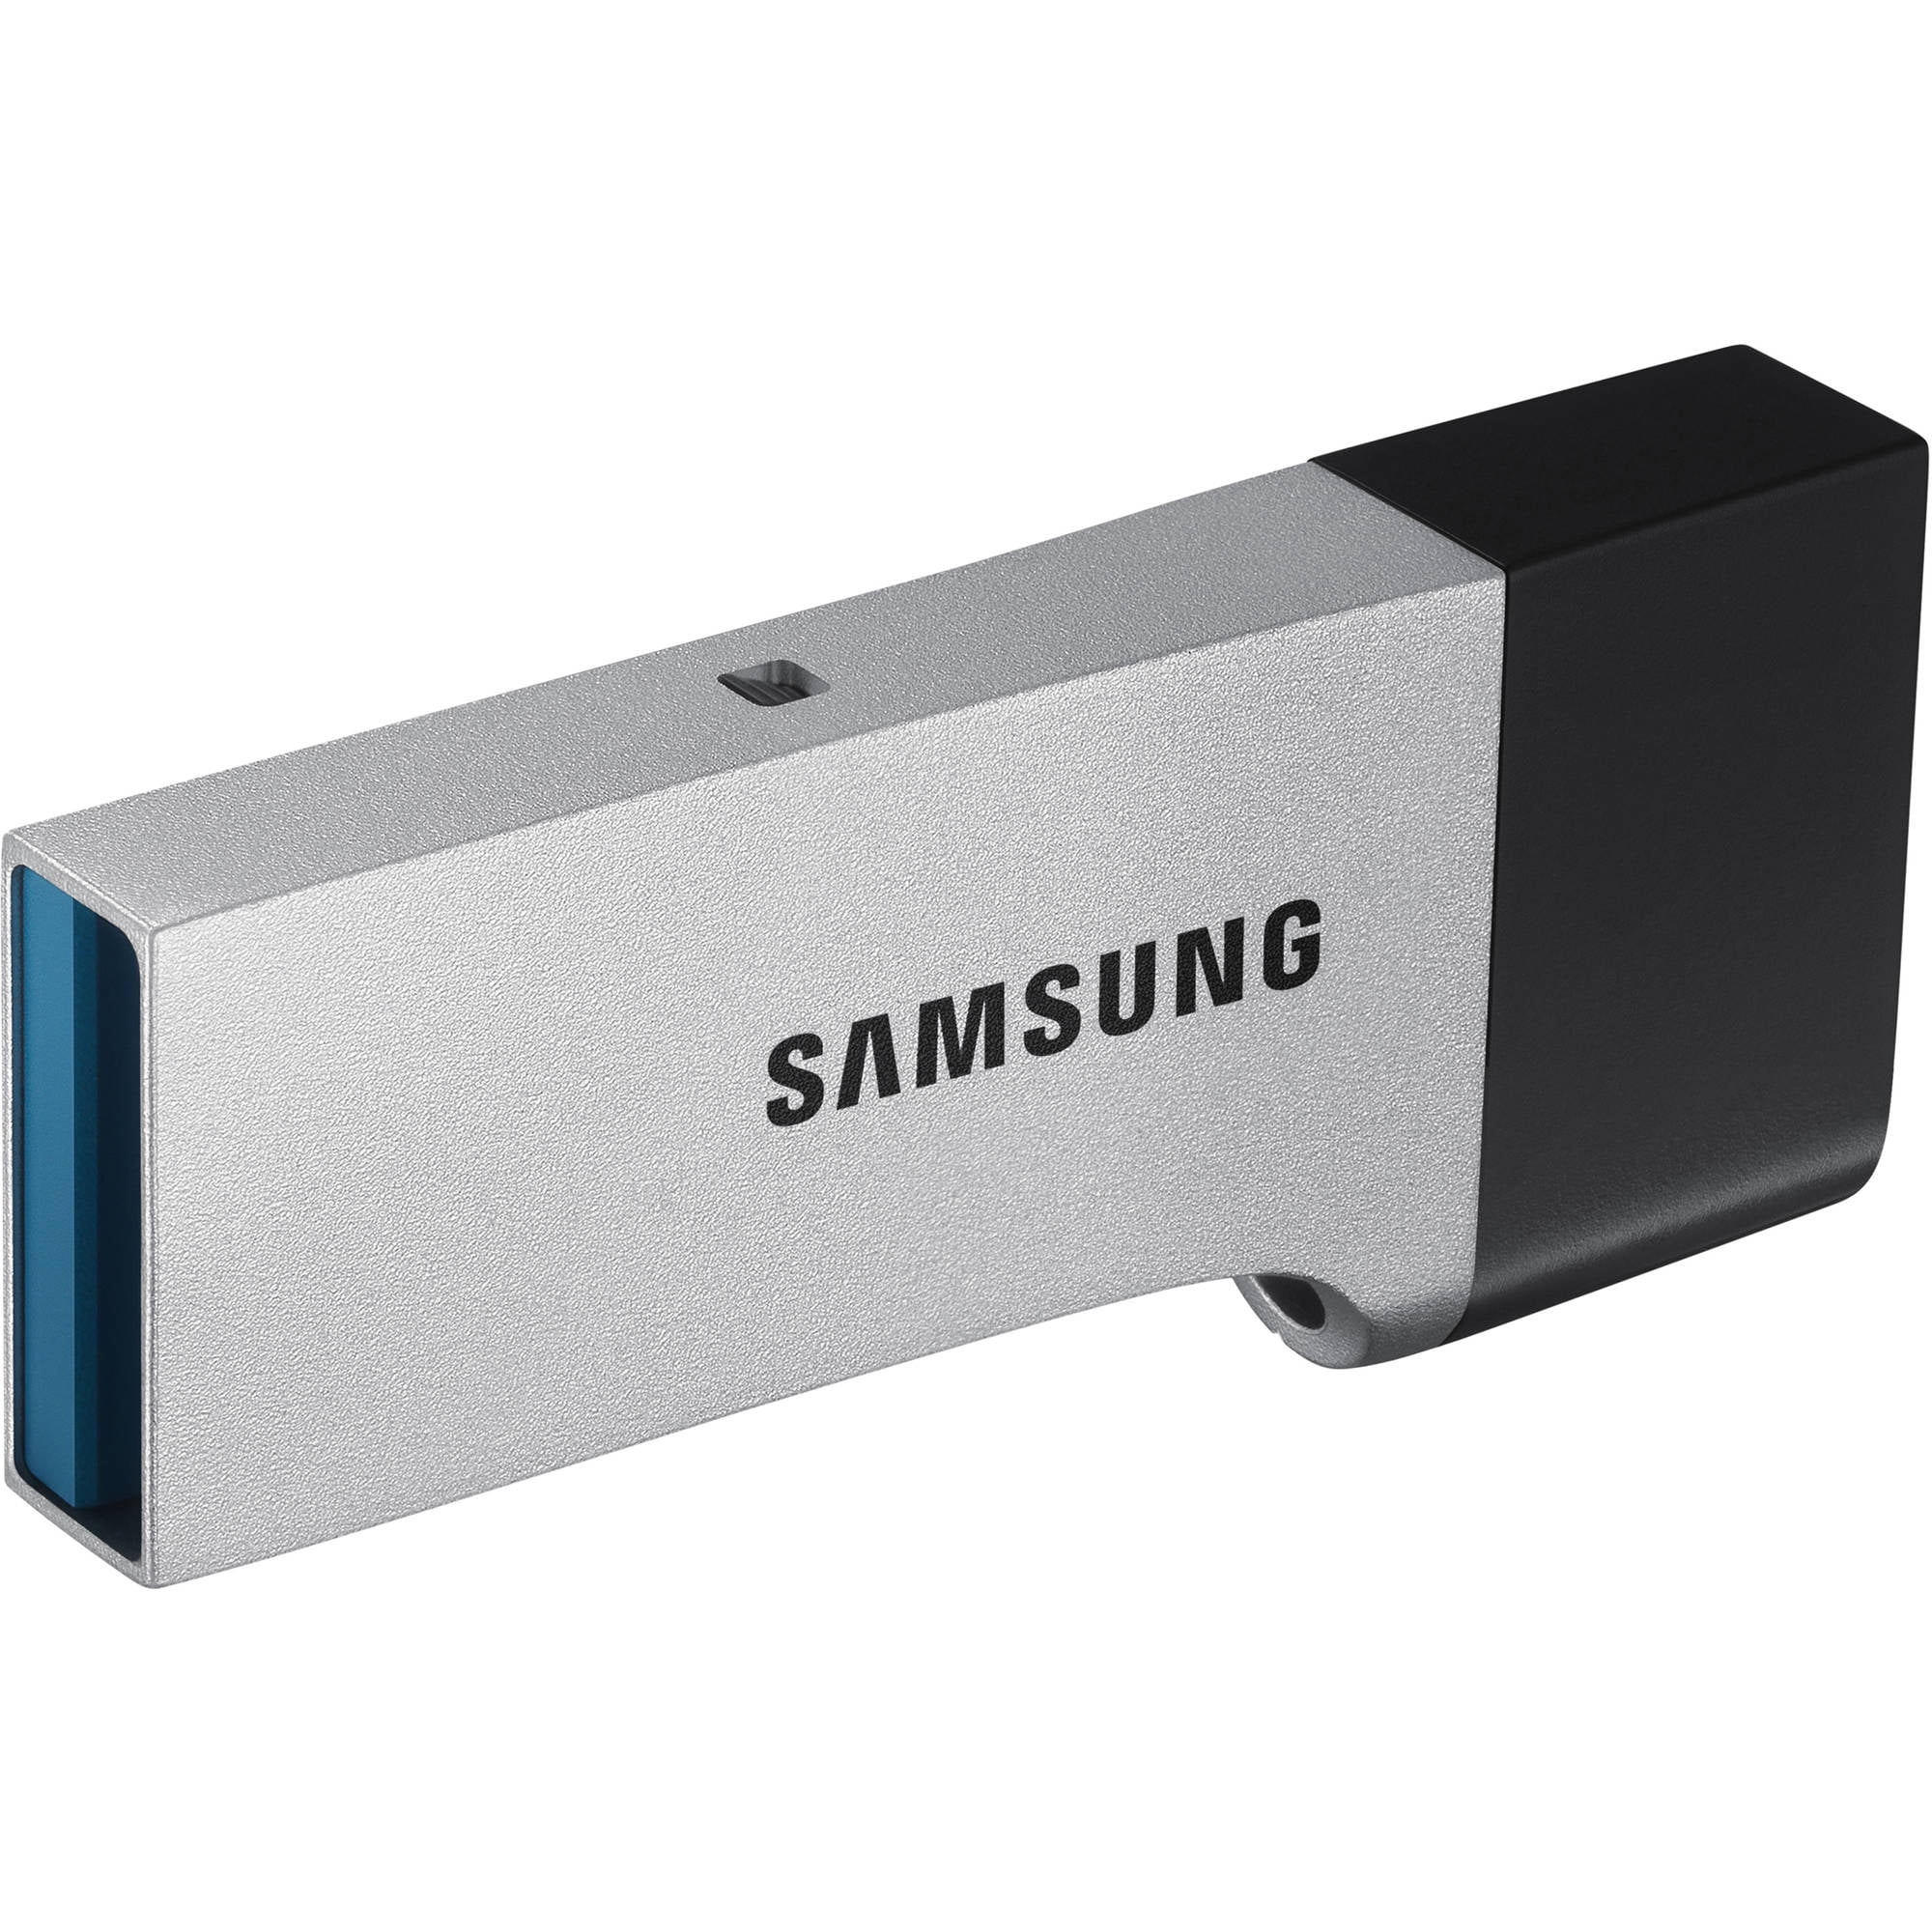 Resolver bulto cerca Samsung USB 3.0 Flash Drive DUO 32GB - Walmart.com